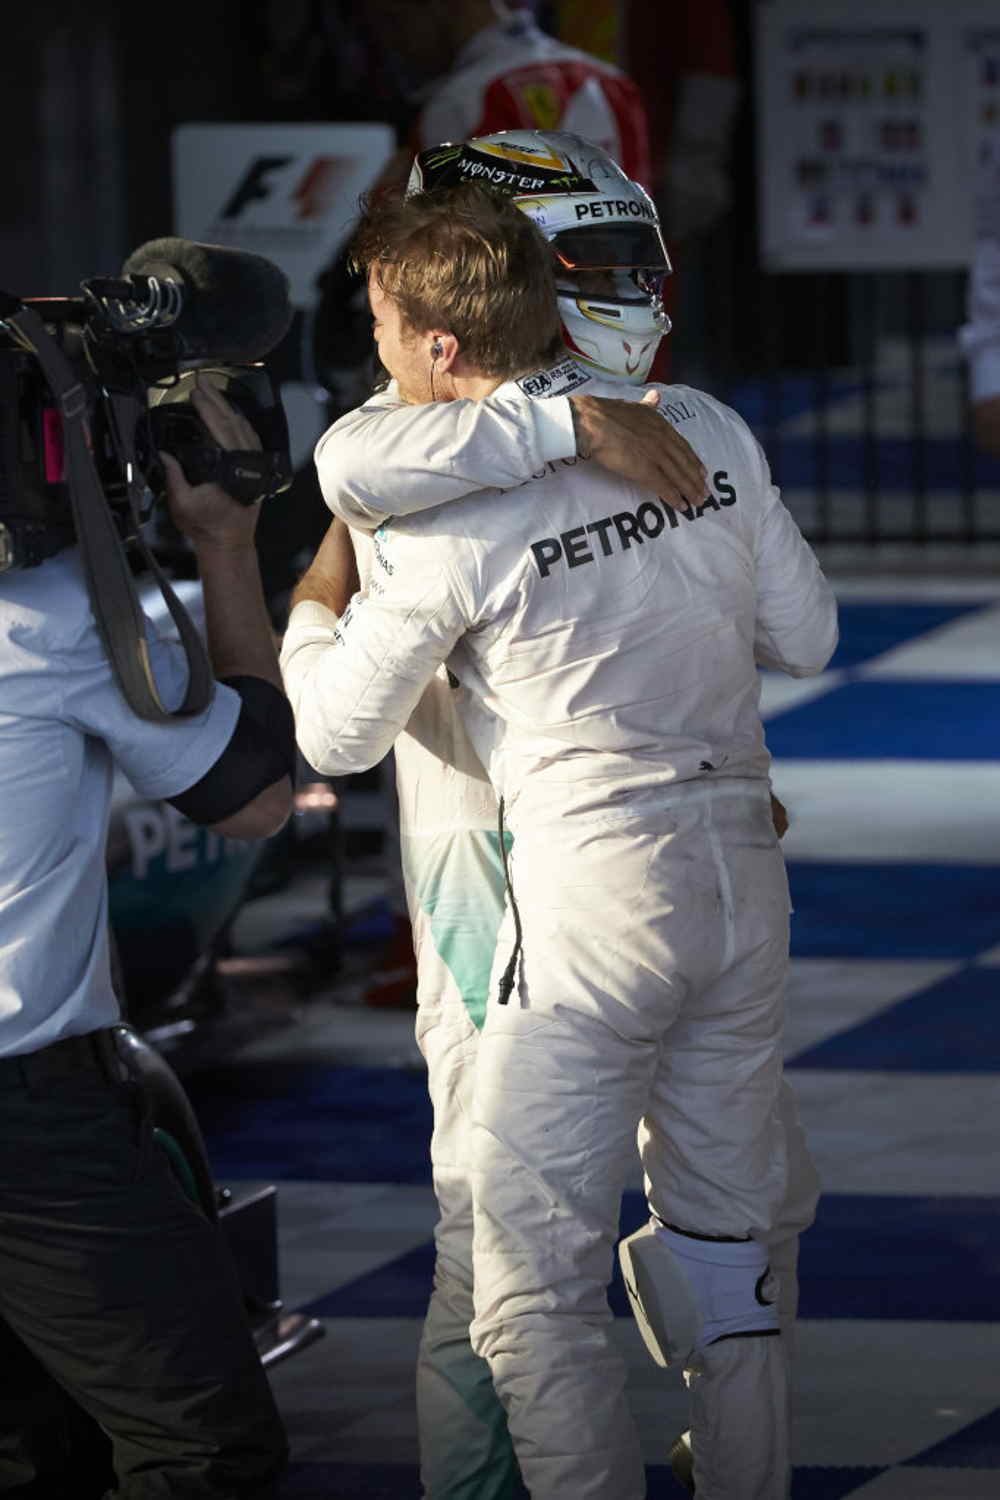 Formula One - MERCEDES AMG PETRONAS, Australian GP 2016. Lewis Hamilton, Nico Rosberg after the race